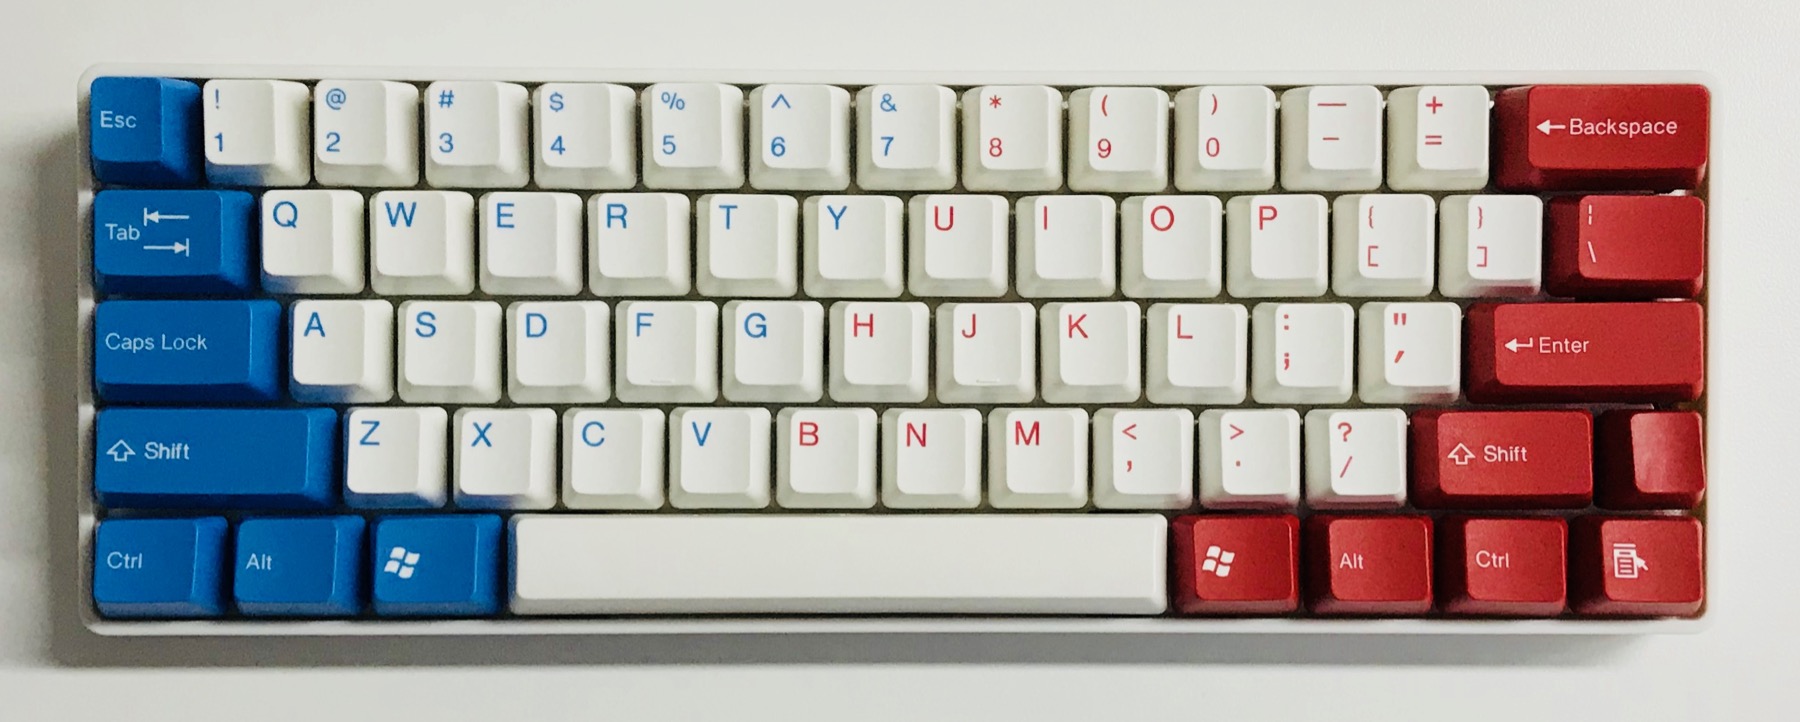 TU60 Keyboard